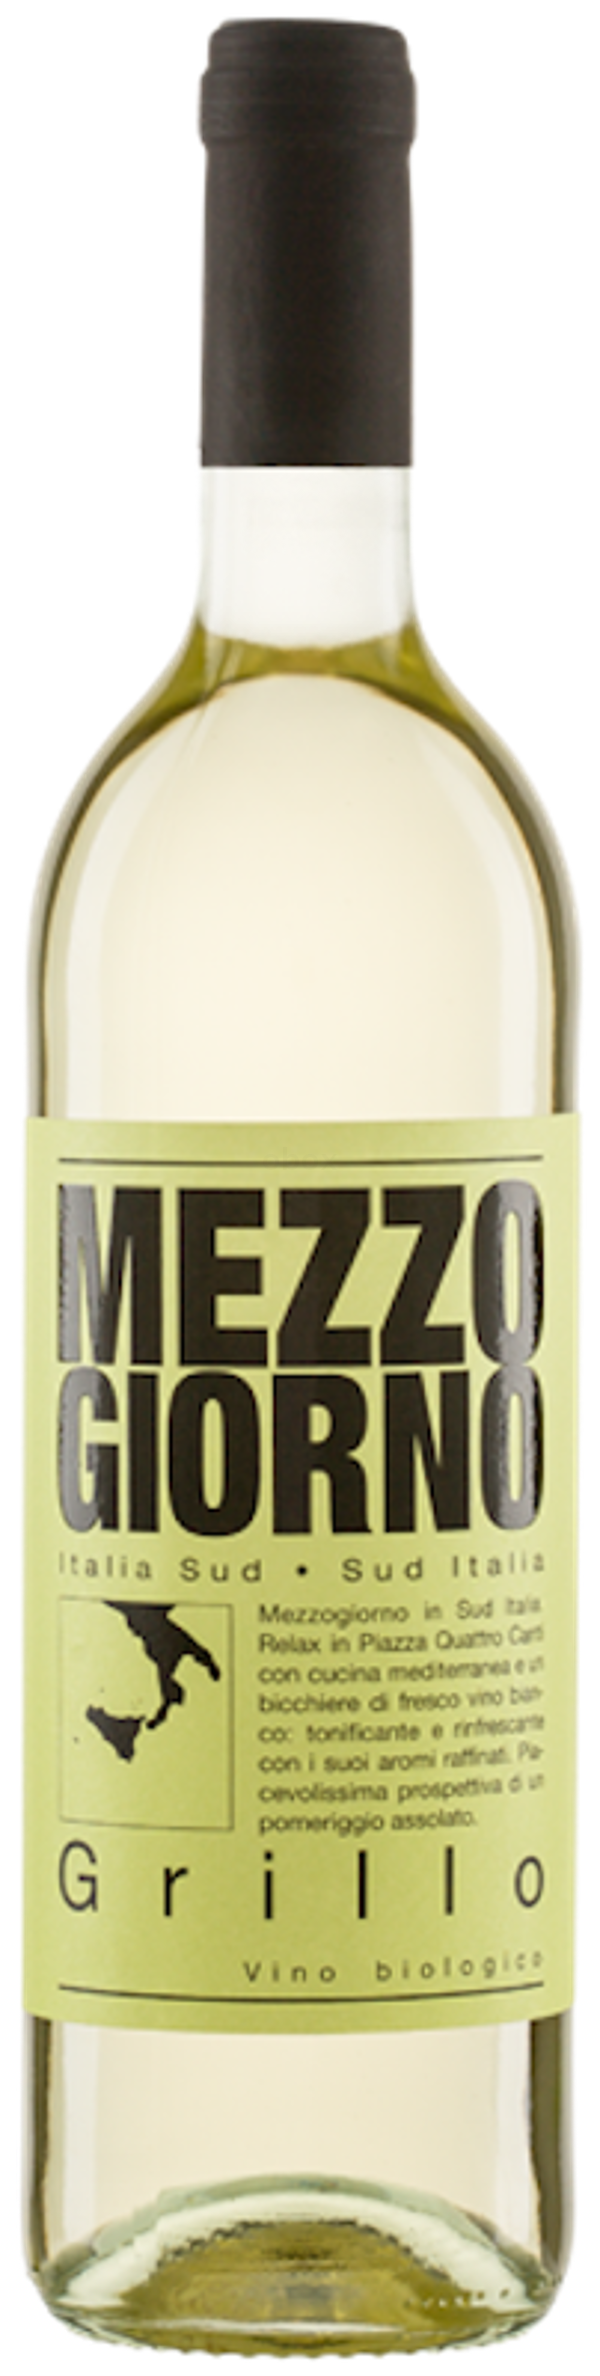 Produktfoto zu Mezzogiorno Grillo weiß 0,75